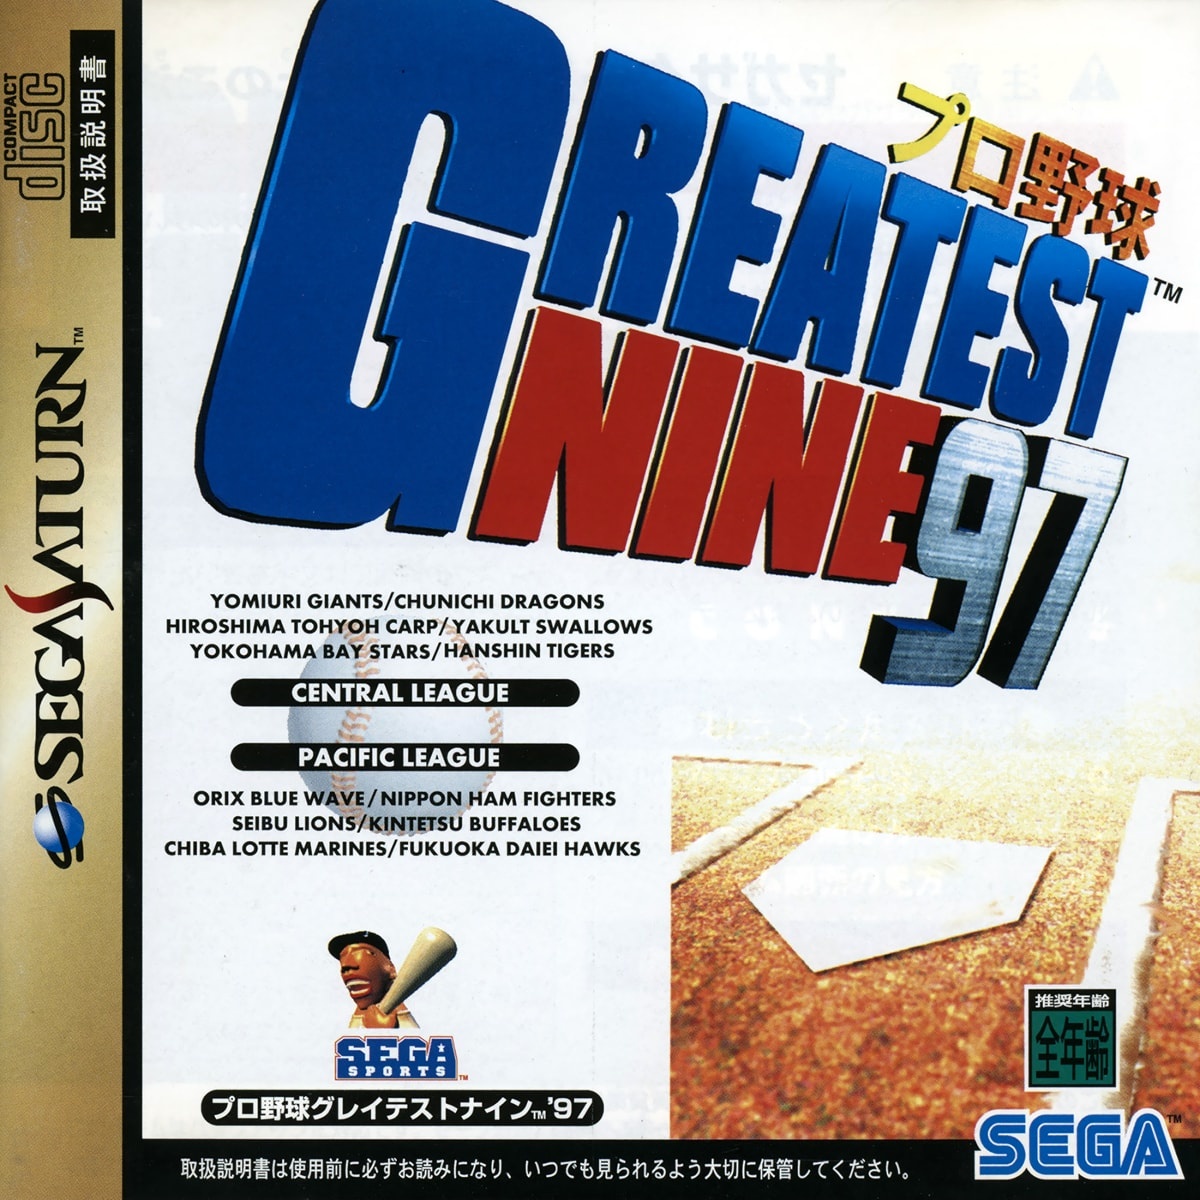 Capa do jogo Pro Yakyuu Greatest Nine 97